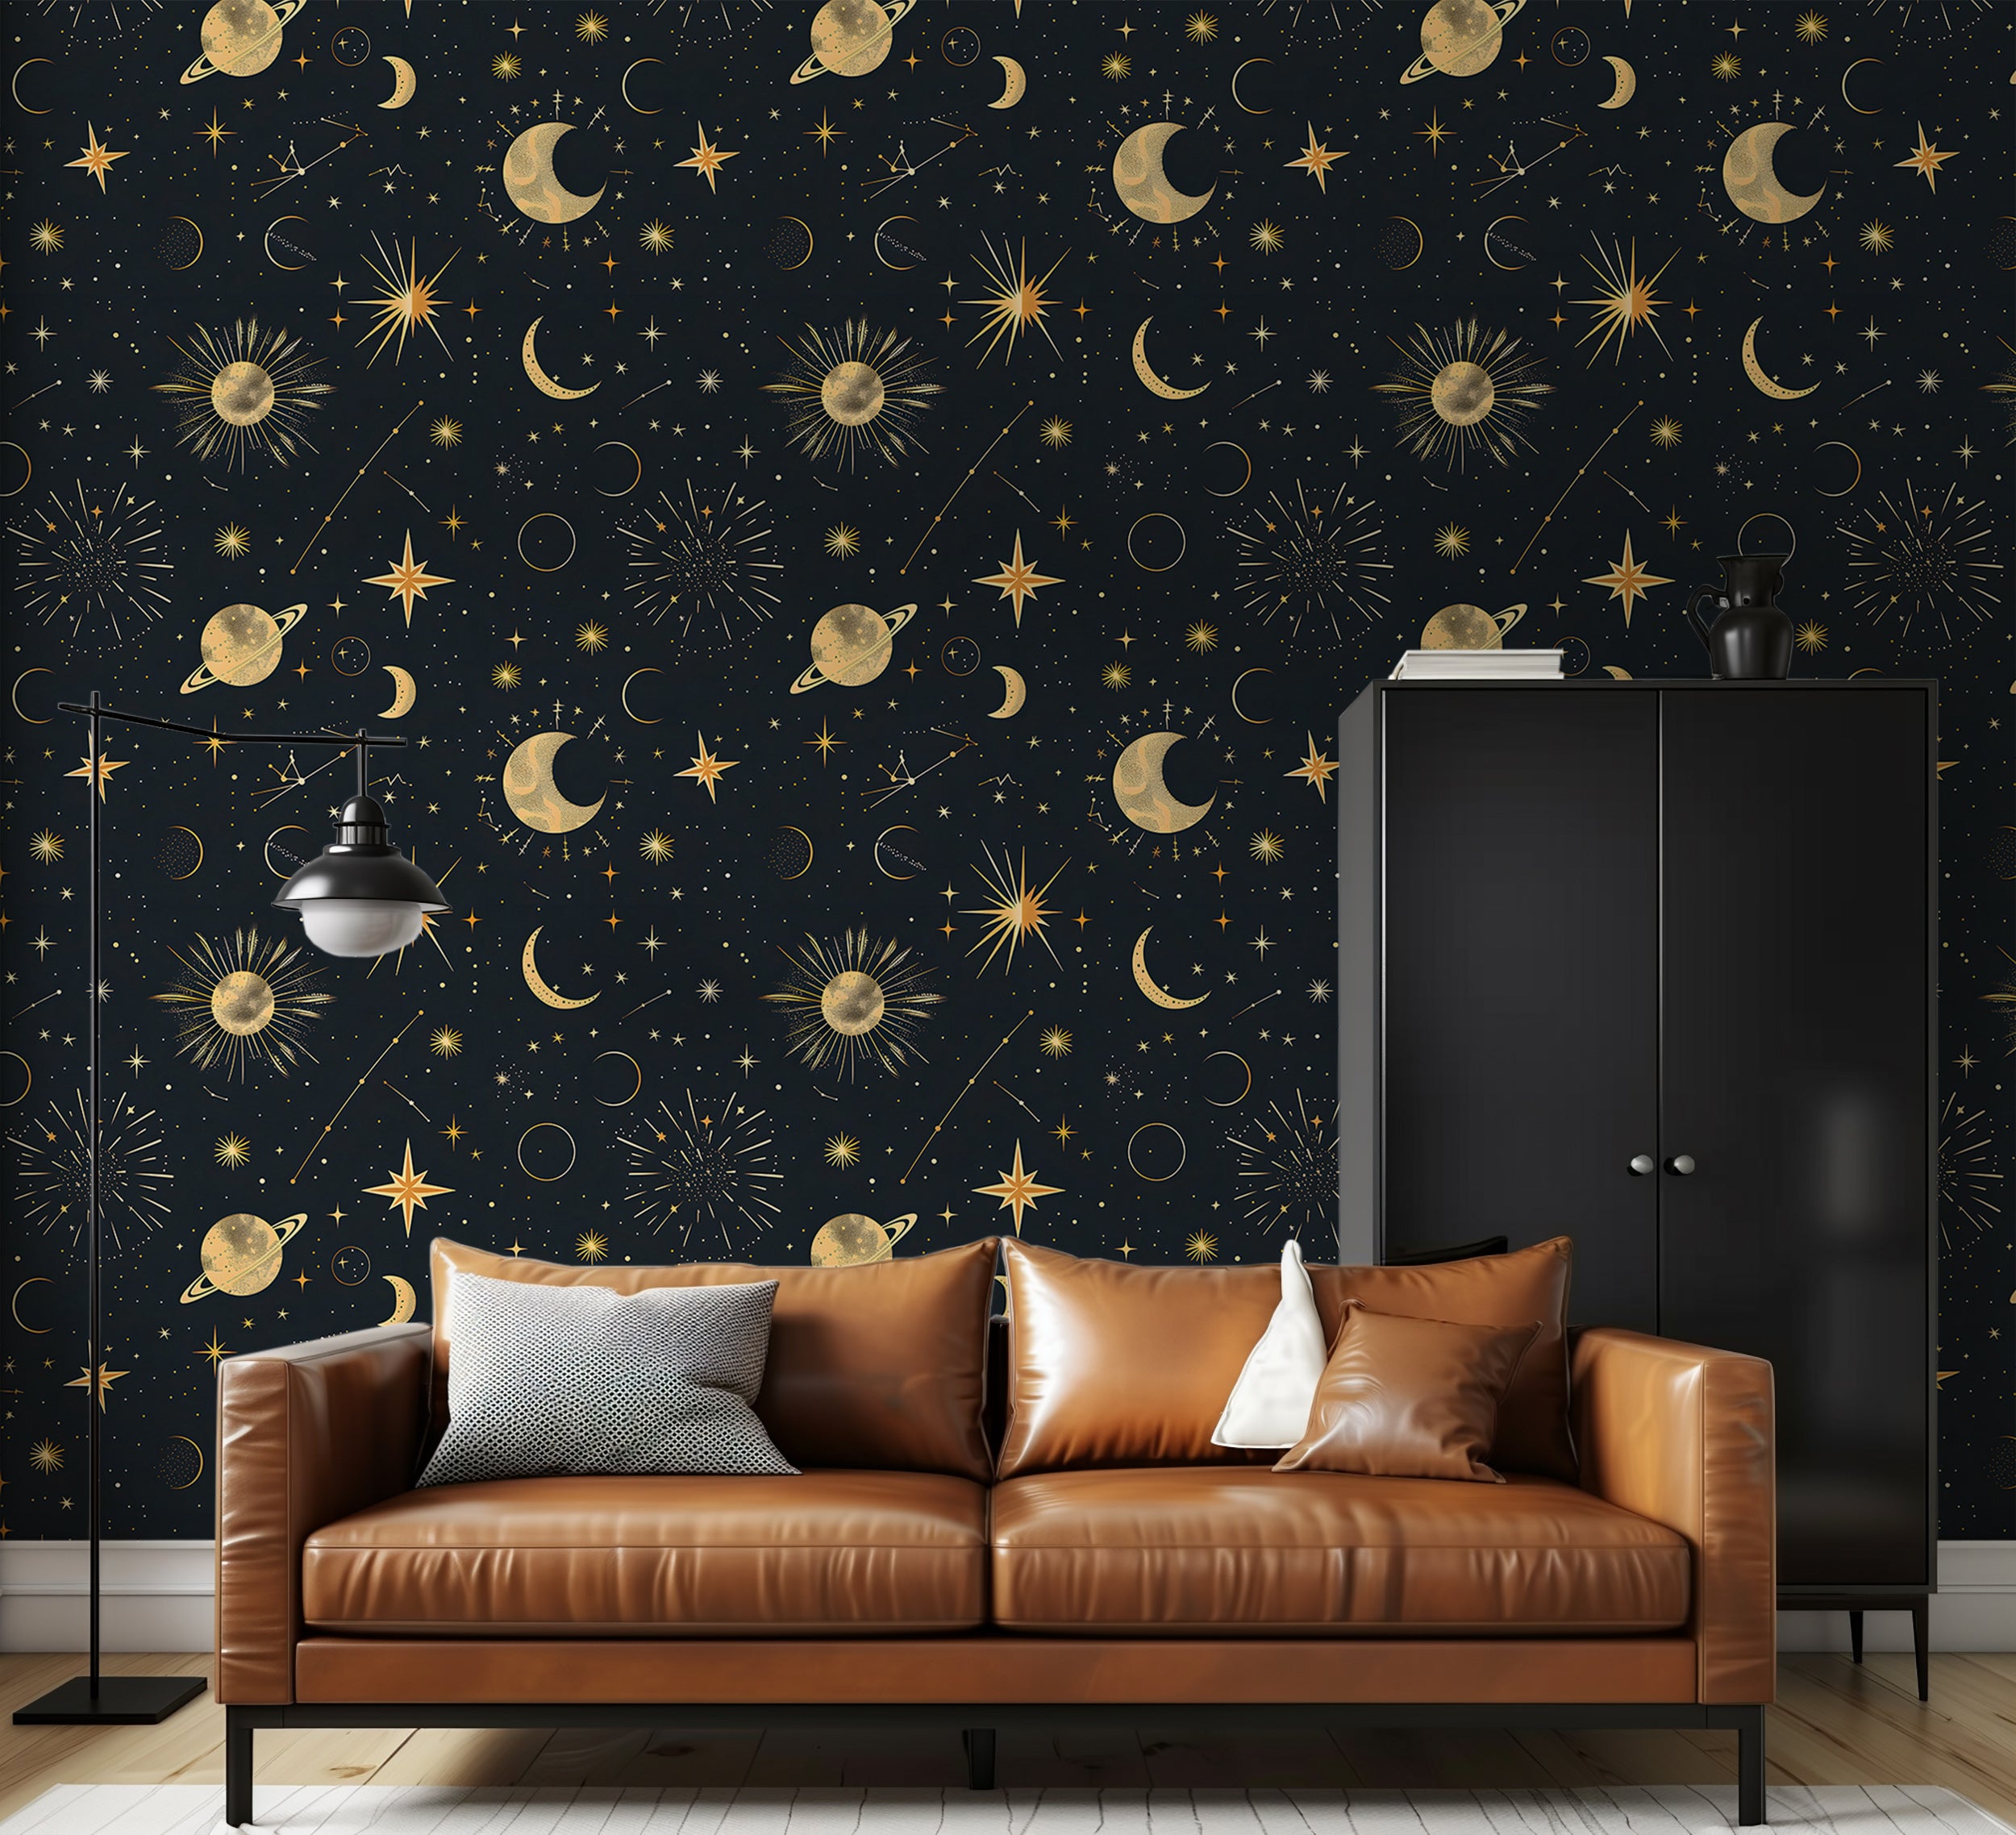 Dark space wallpaper